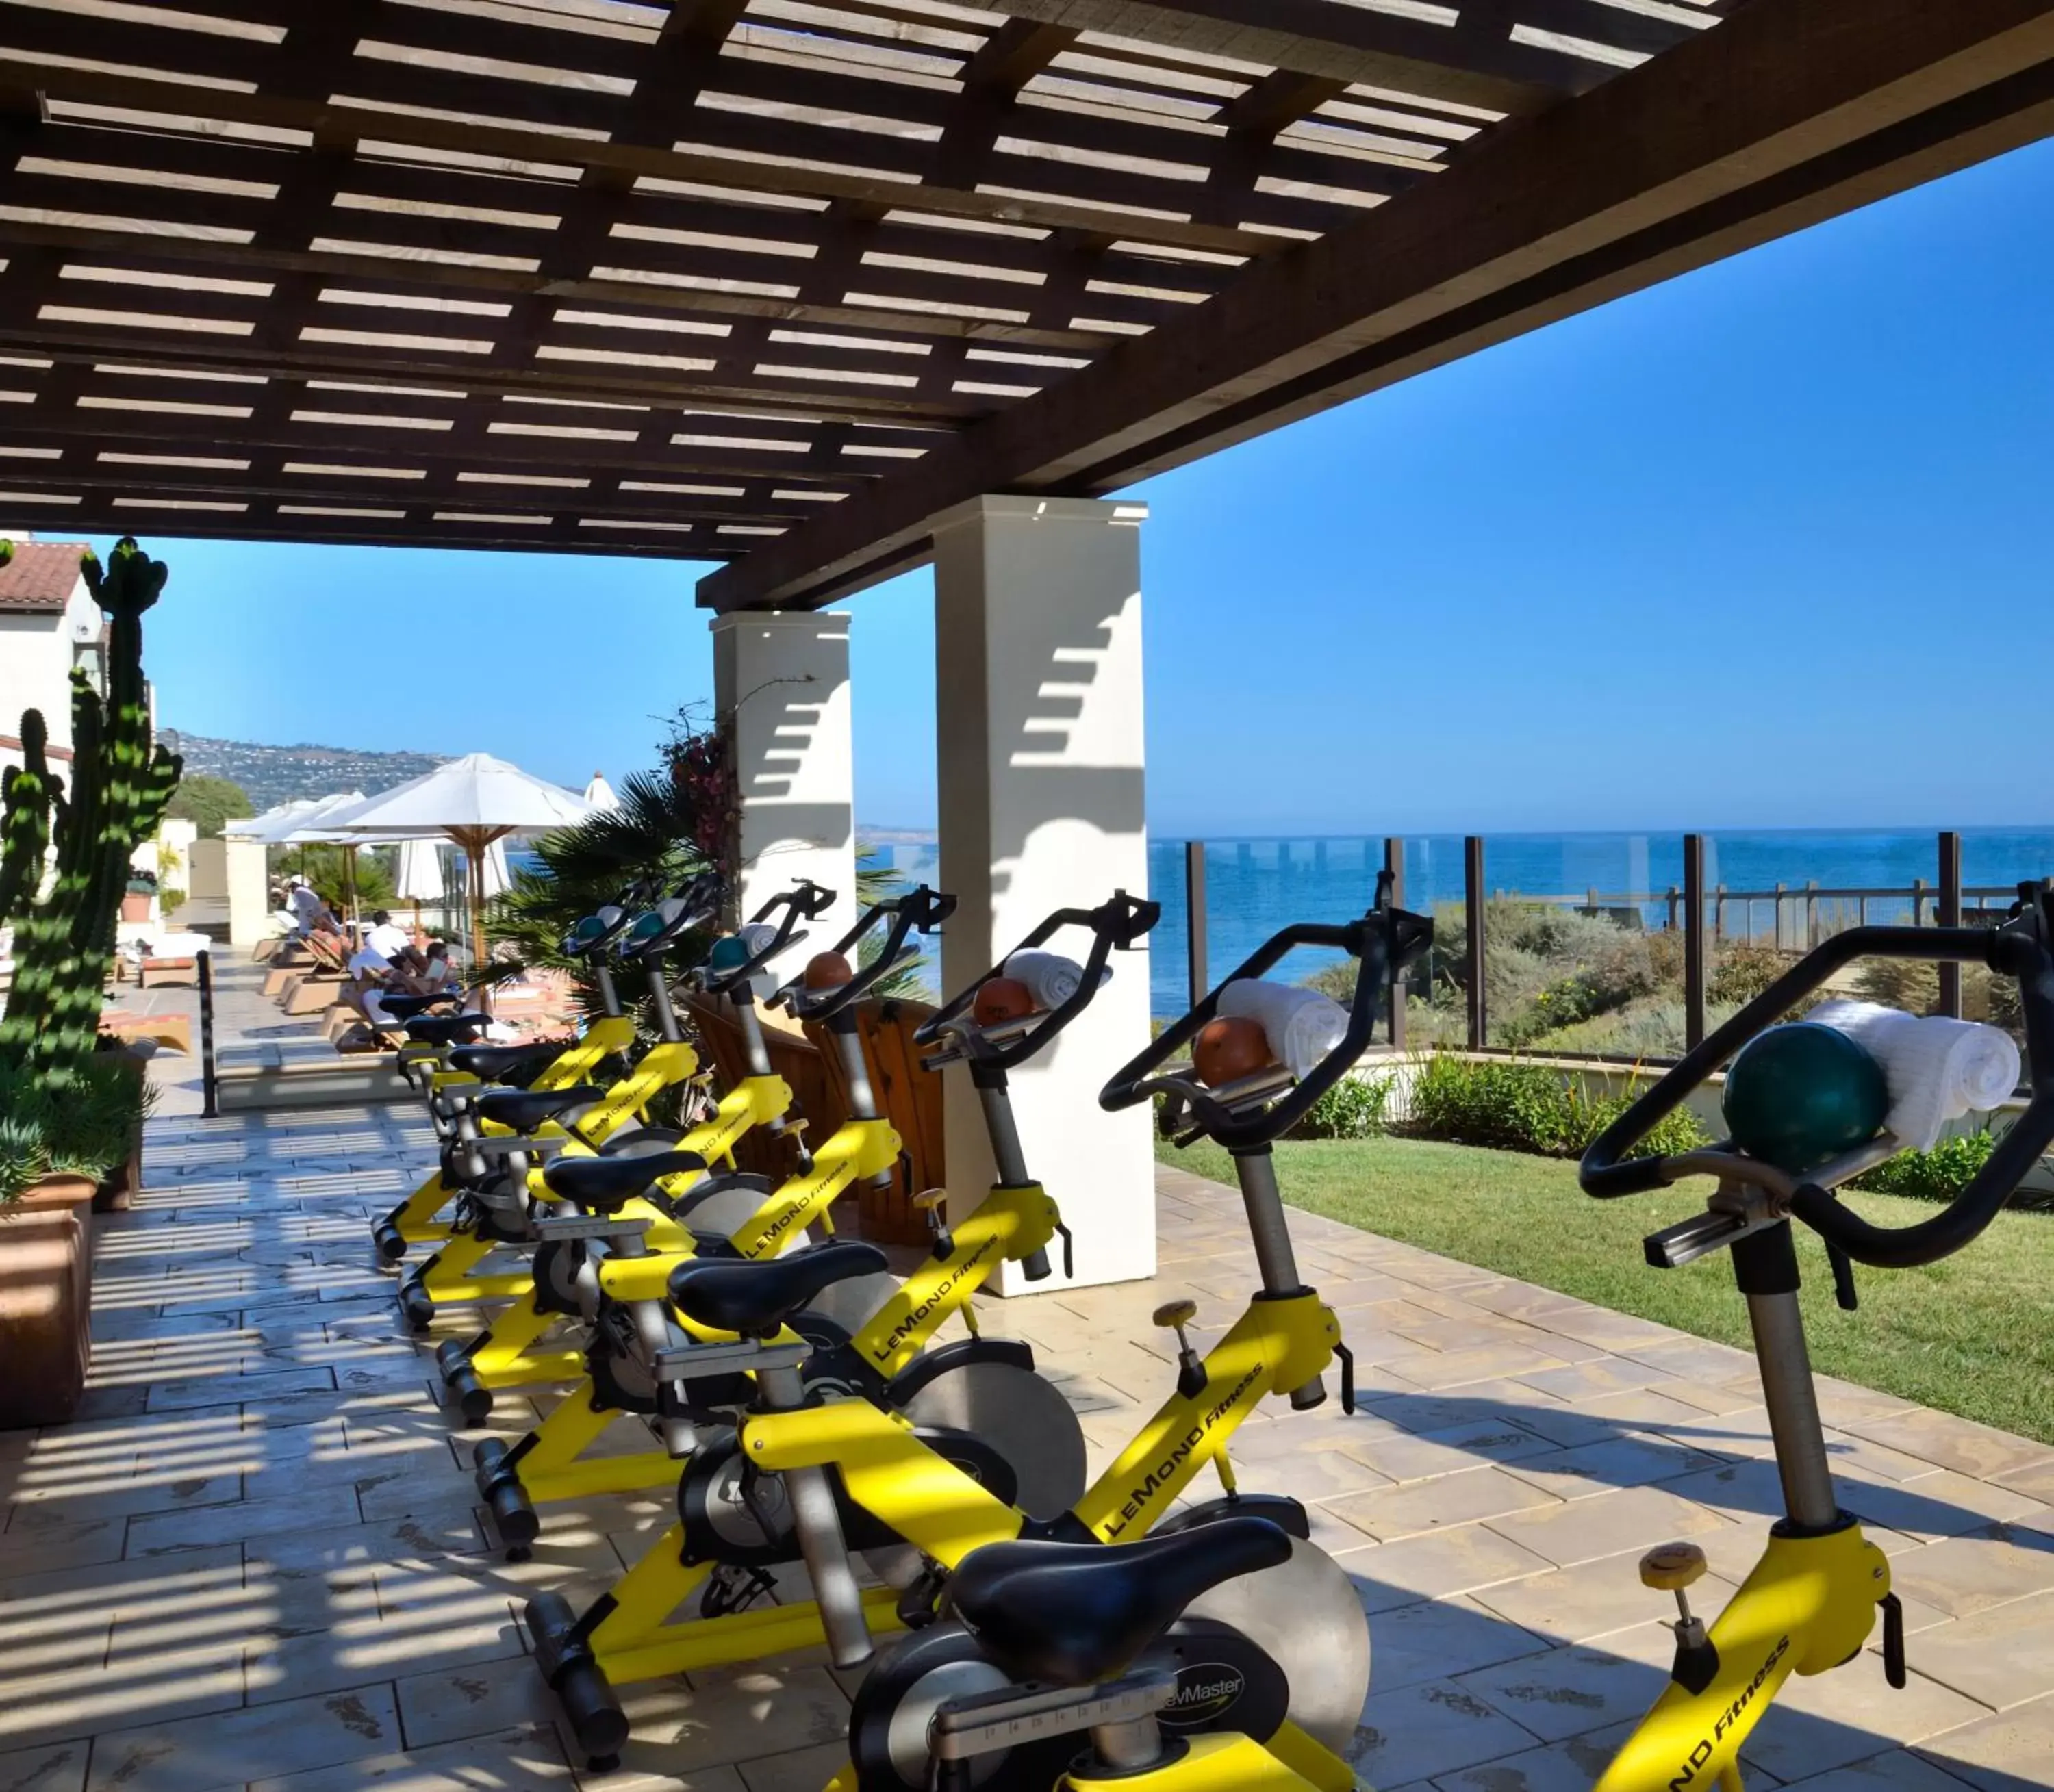 Fitness centre/facilities, Fitness Center/Facilities in Terranea Resort